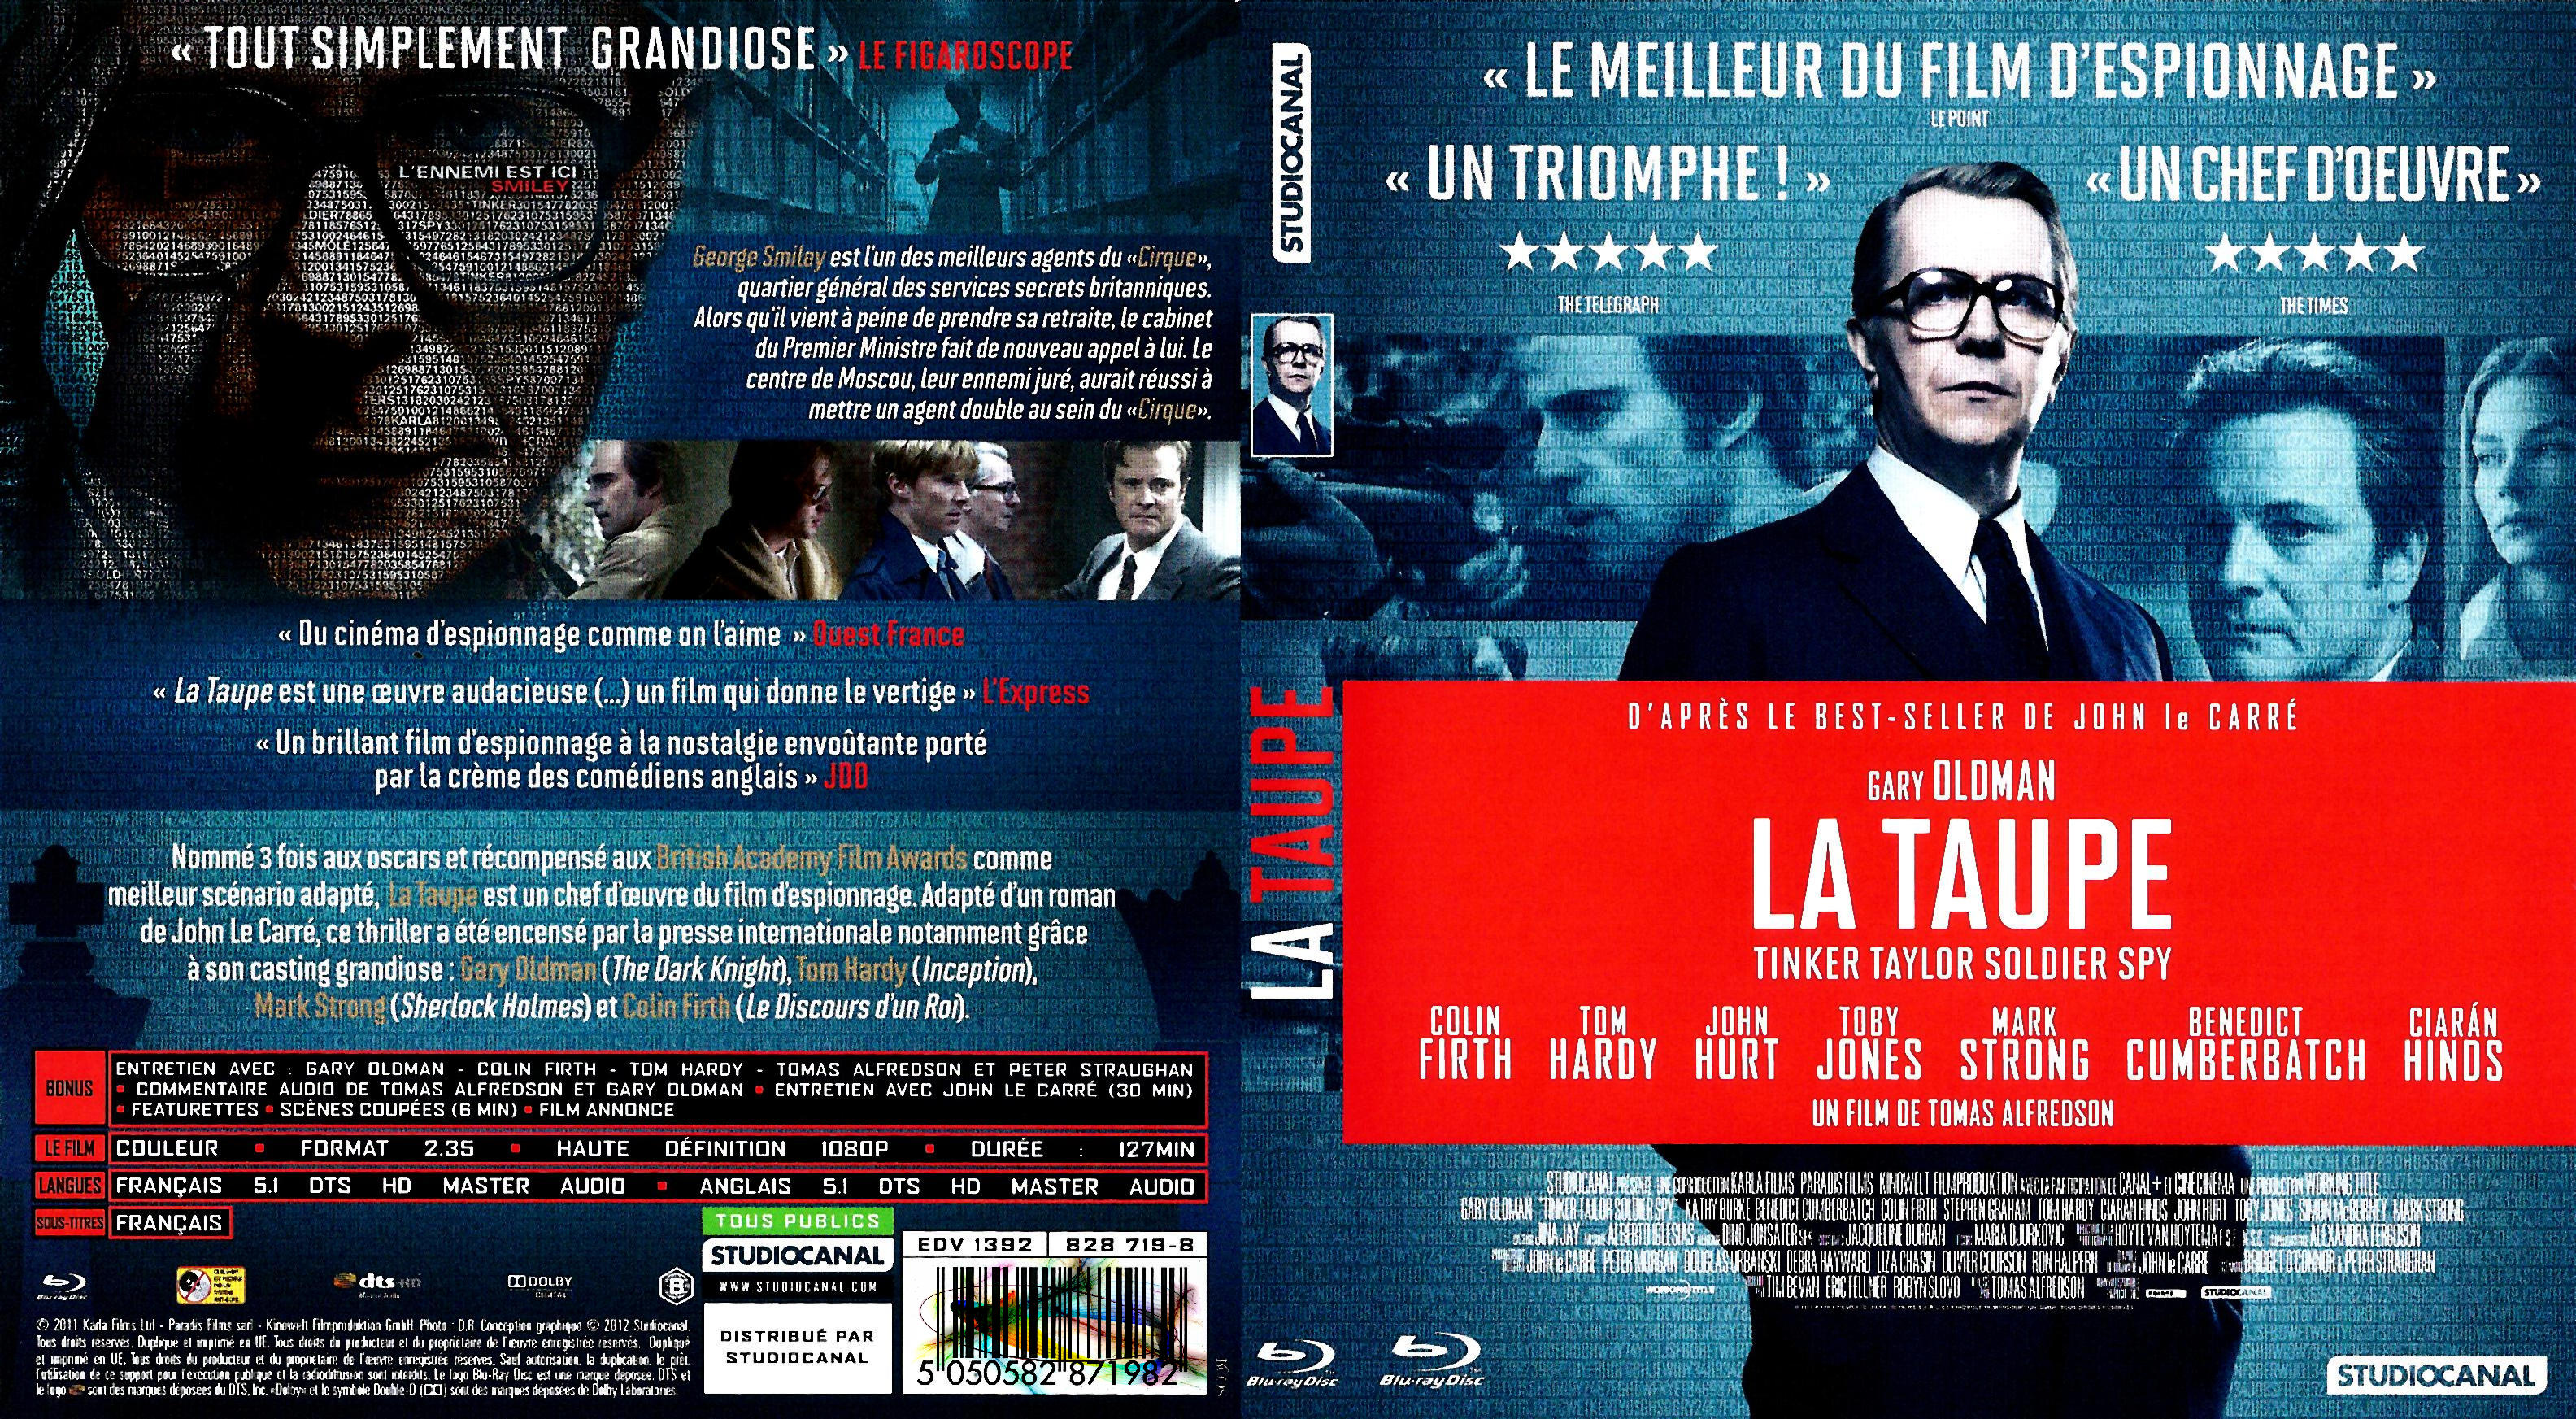 Jaquette DVD La taupe (BLU-RAY) v2